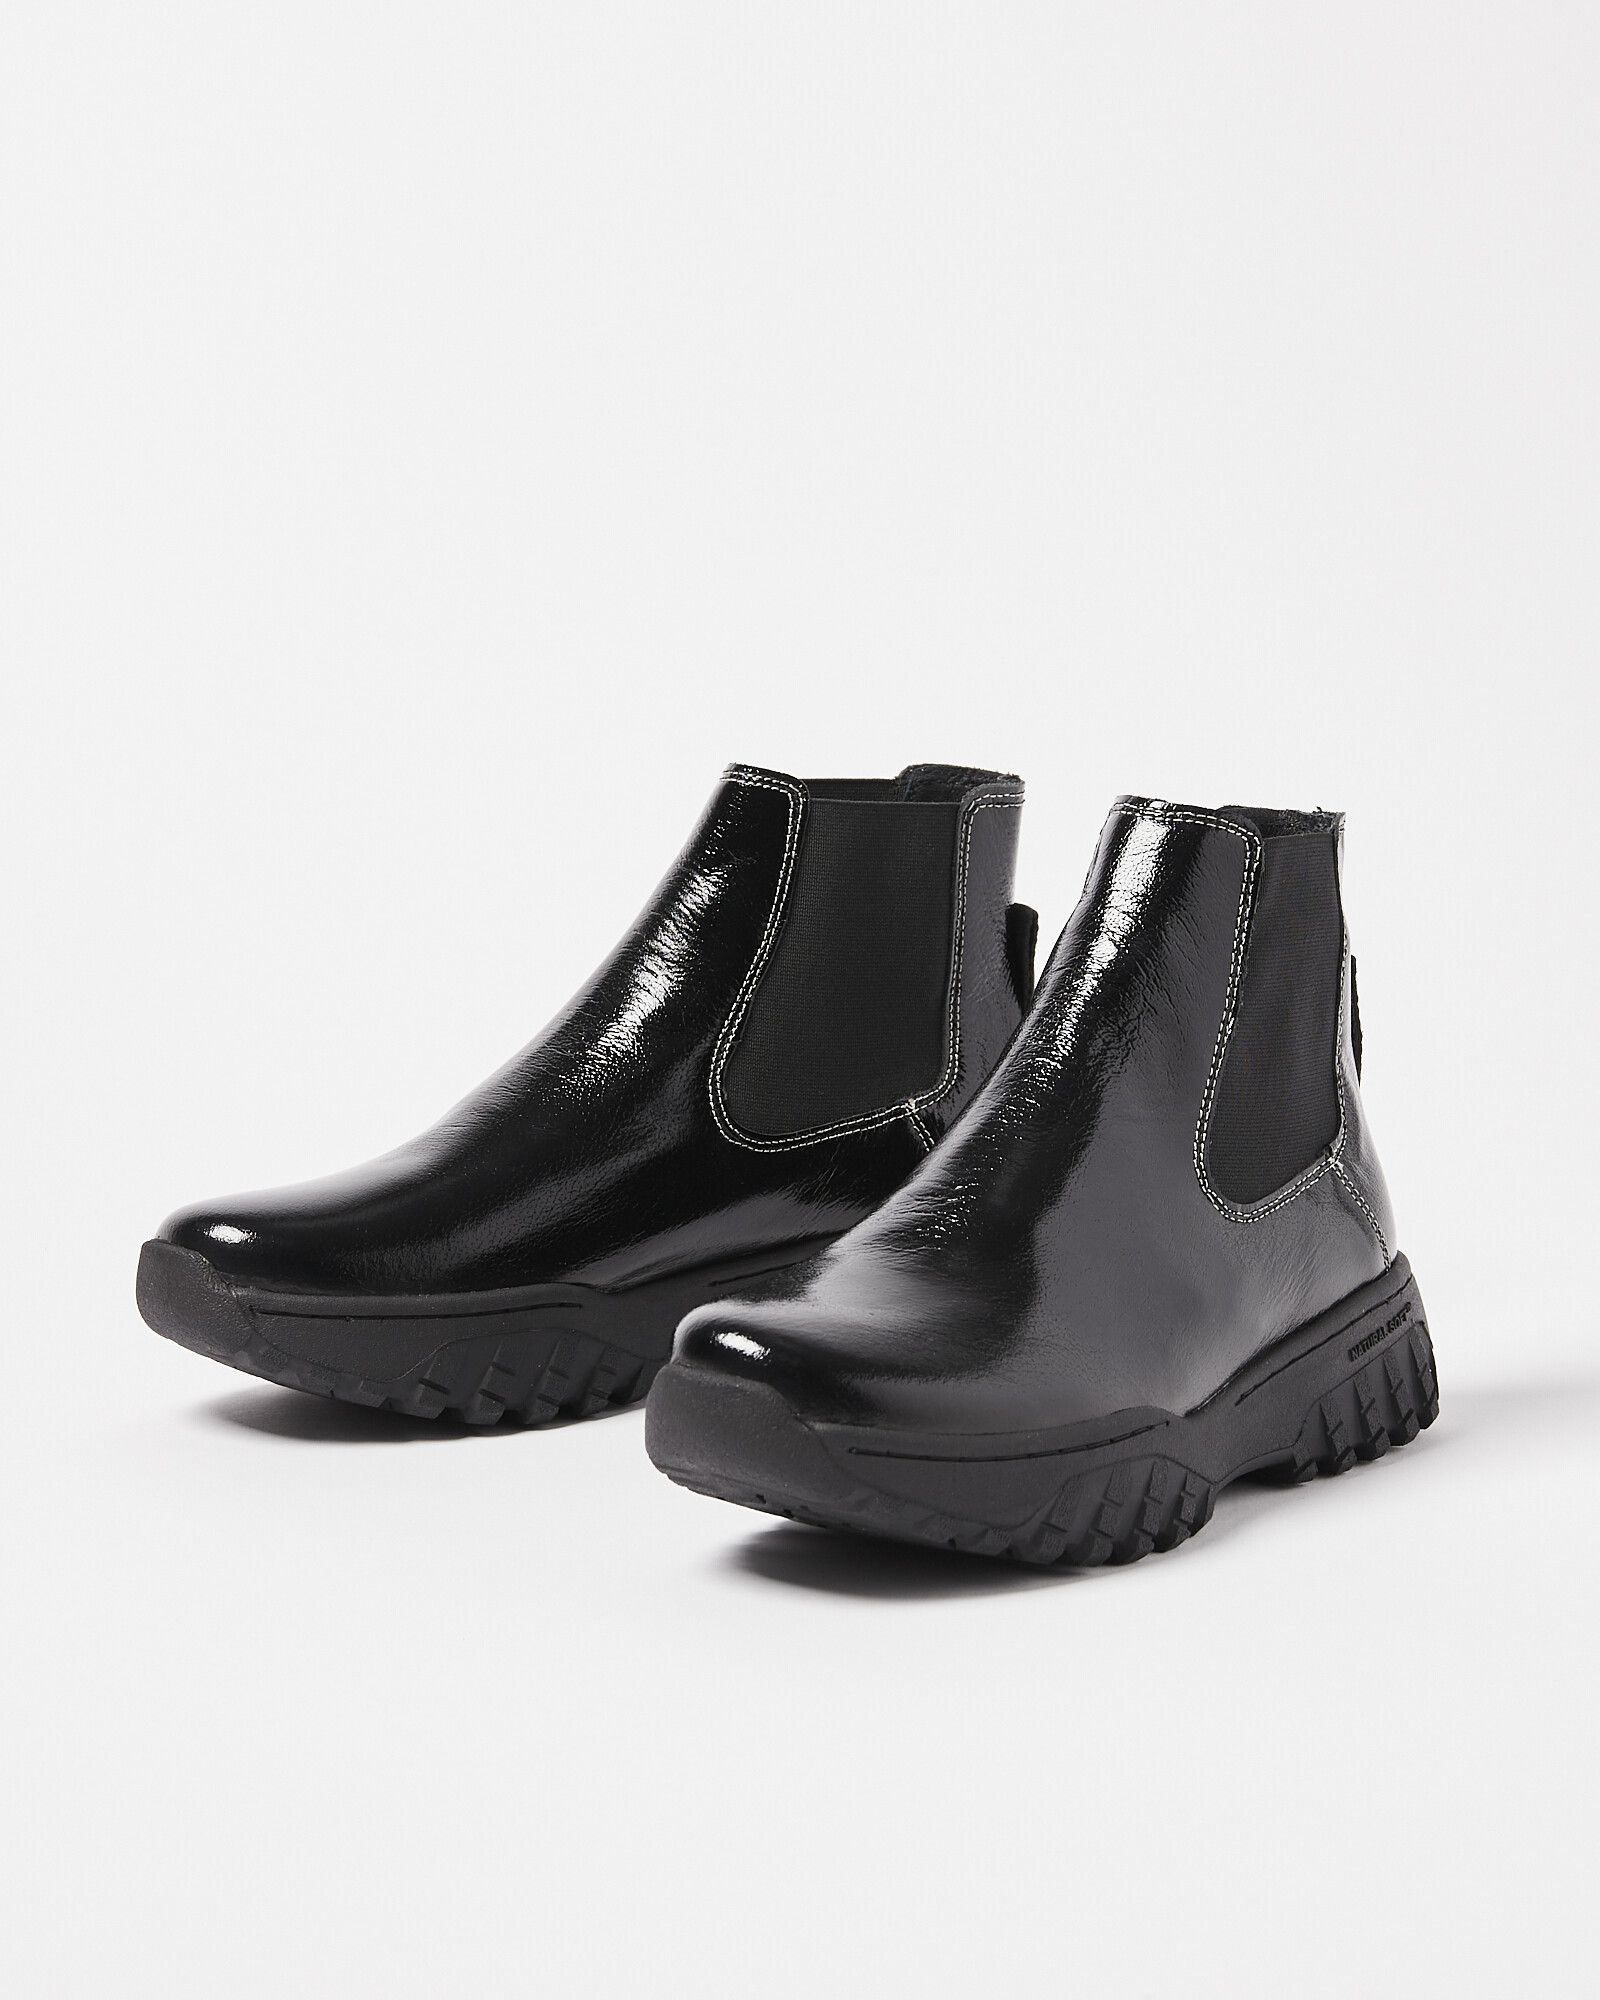 Woden Elena Patent Black Ankle Boots | Bonas